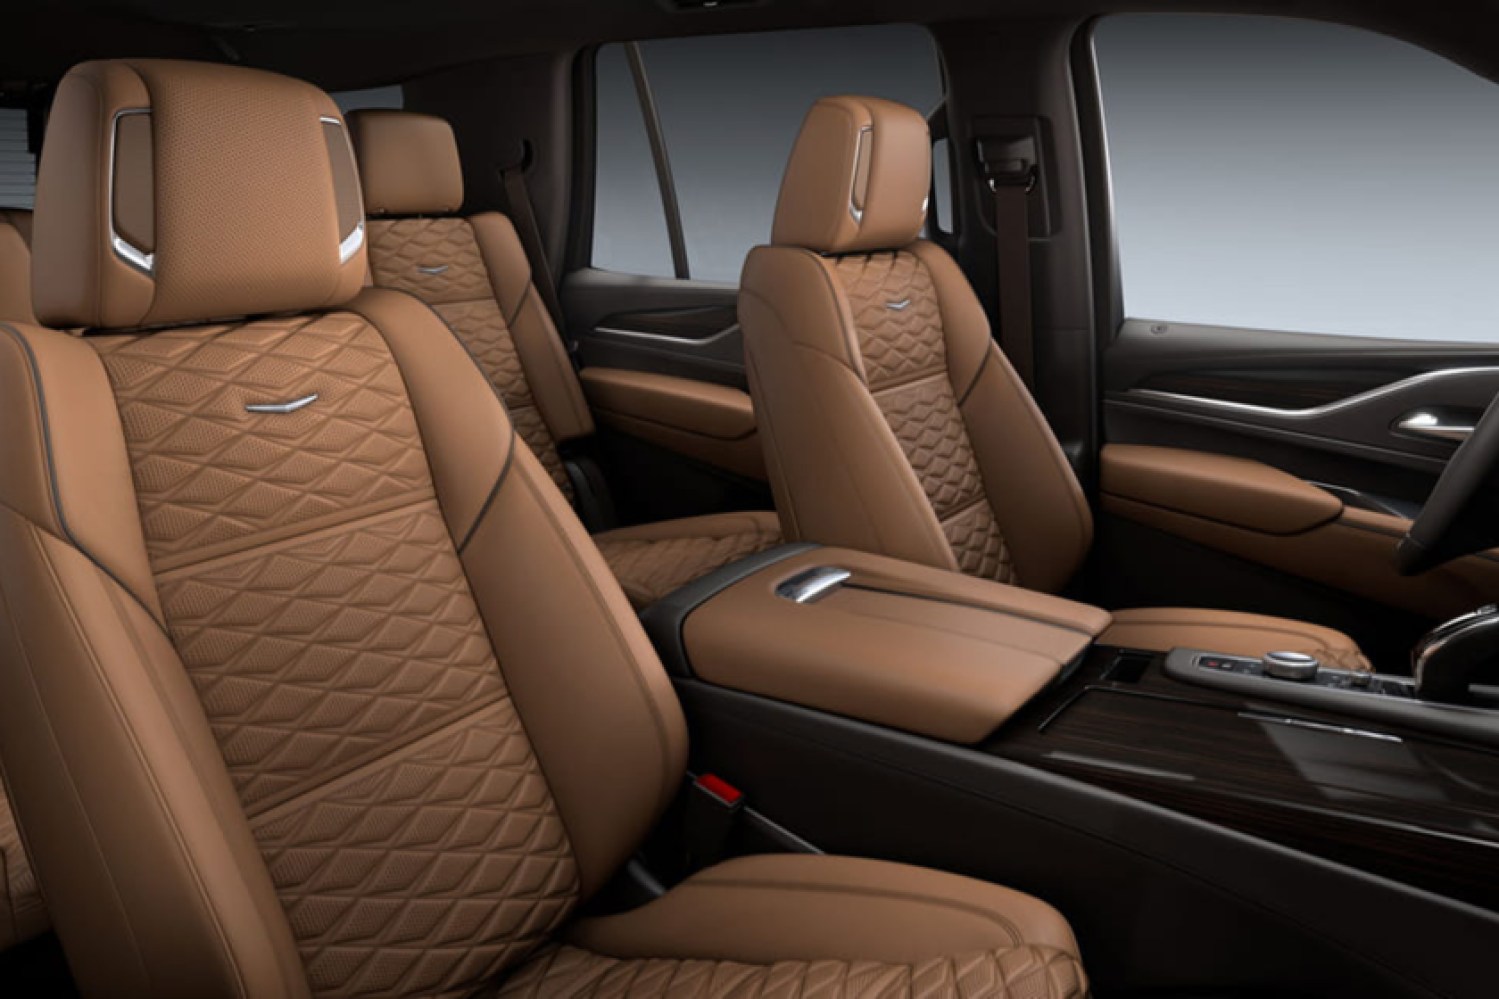 The lavish and comfortable interior of the 2021 Cadillac Escalade